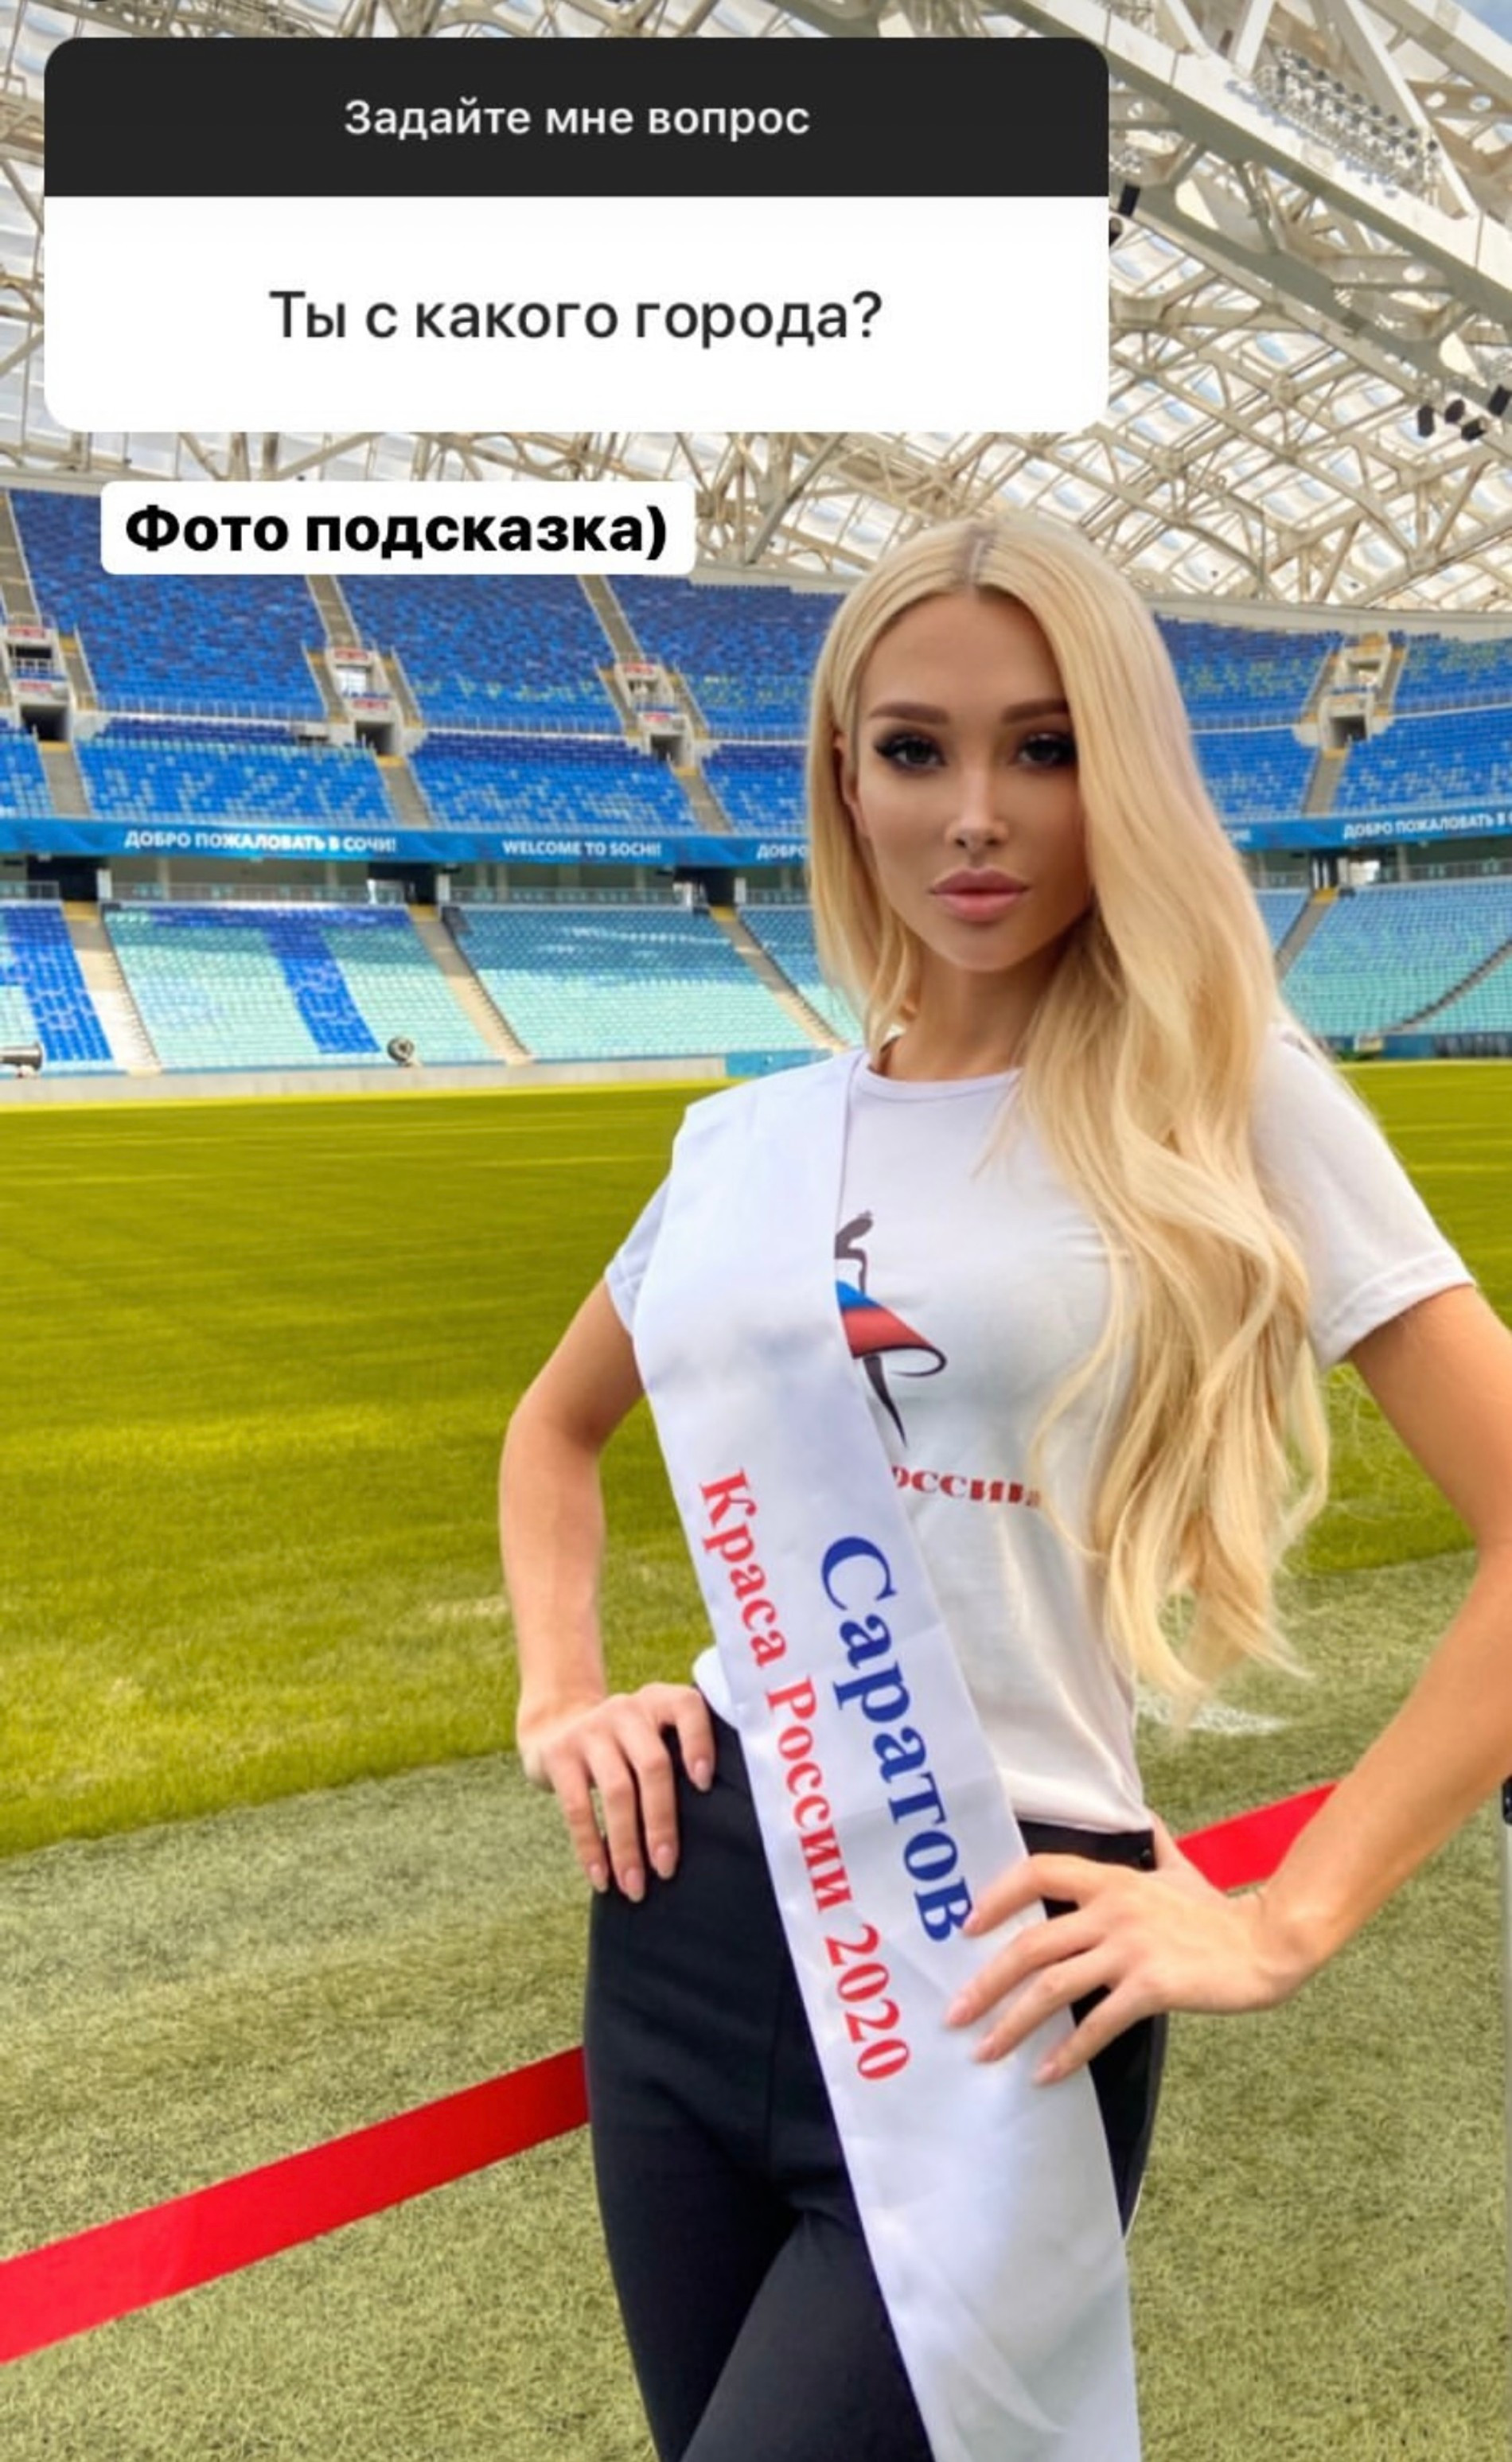 Ангелина на конкурсе «Краса России – 2020»
Фото: Инстаграм (запрещен в РФ) героини материала 